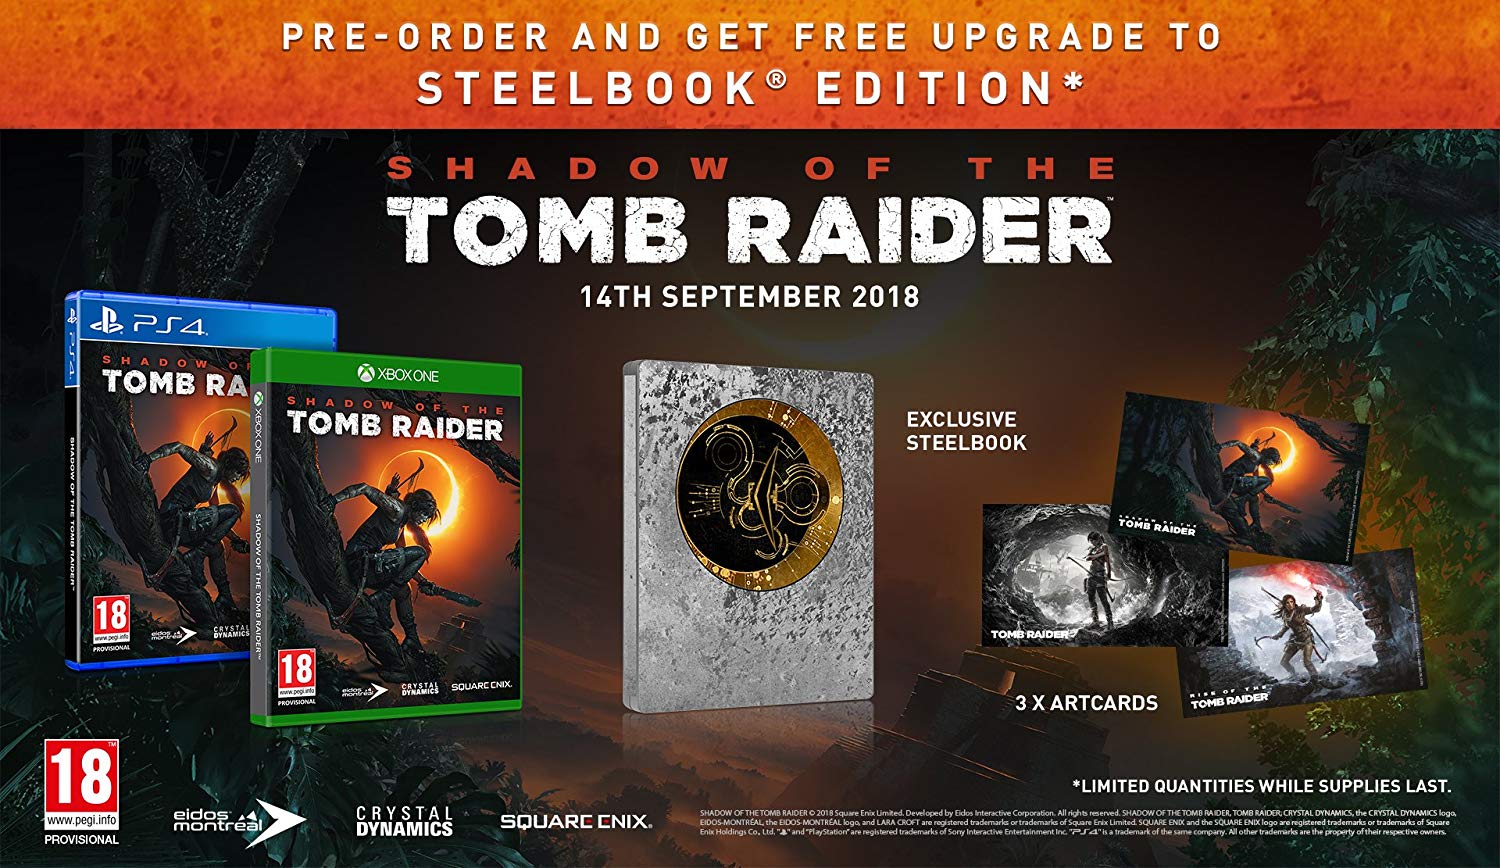 Коллекционное издание Shadow of the Tomb Raider - Croft Steelbook Edition